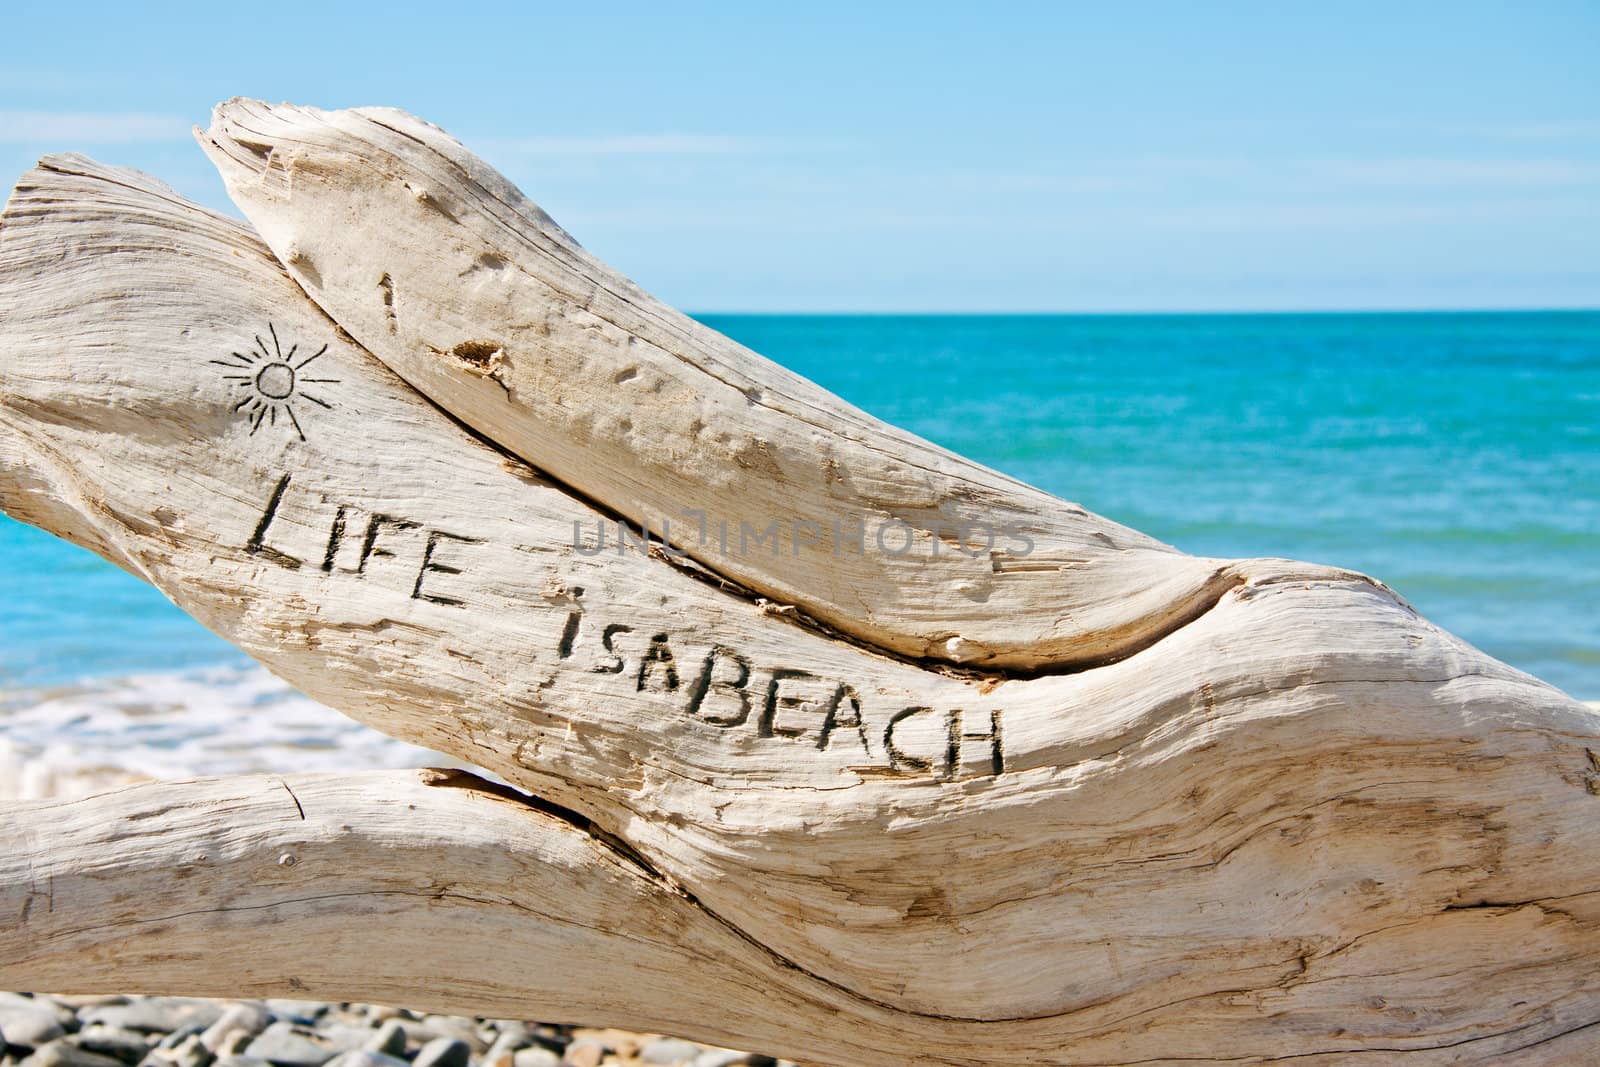 Life's a beach! by Jaykayl